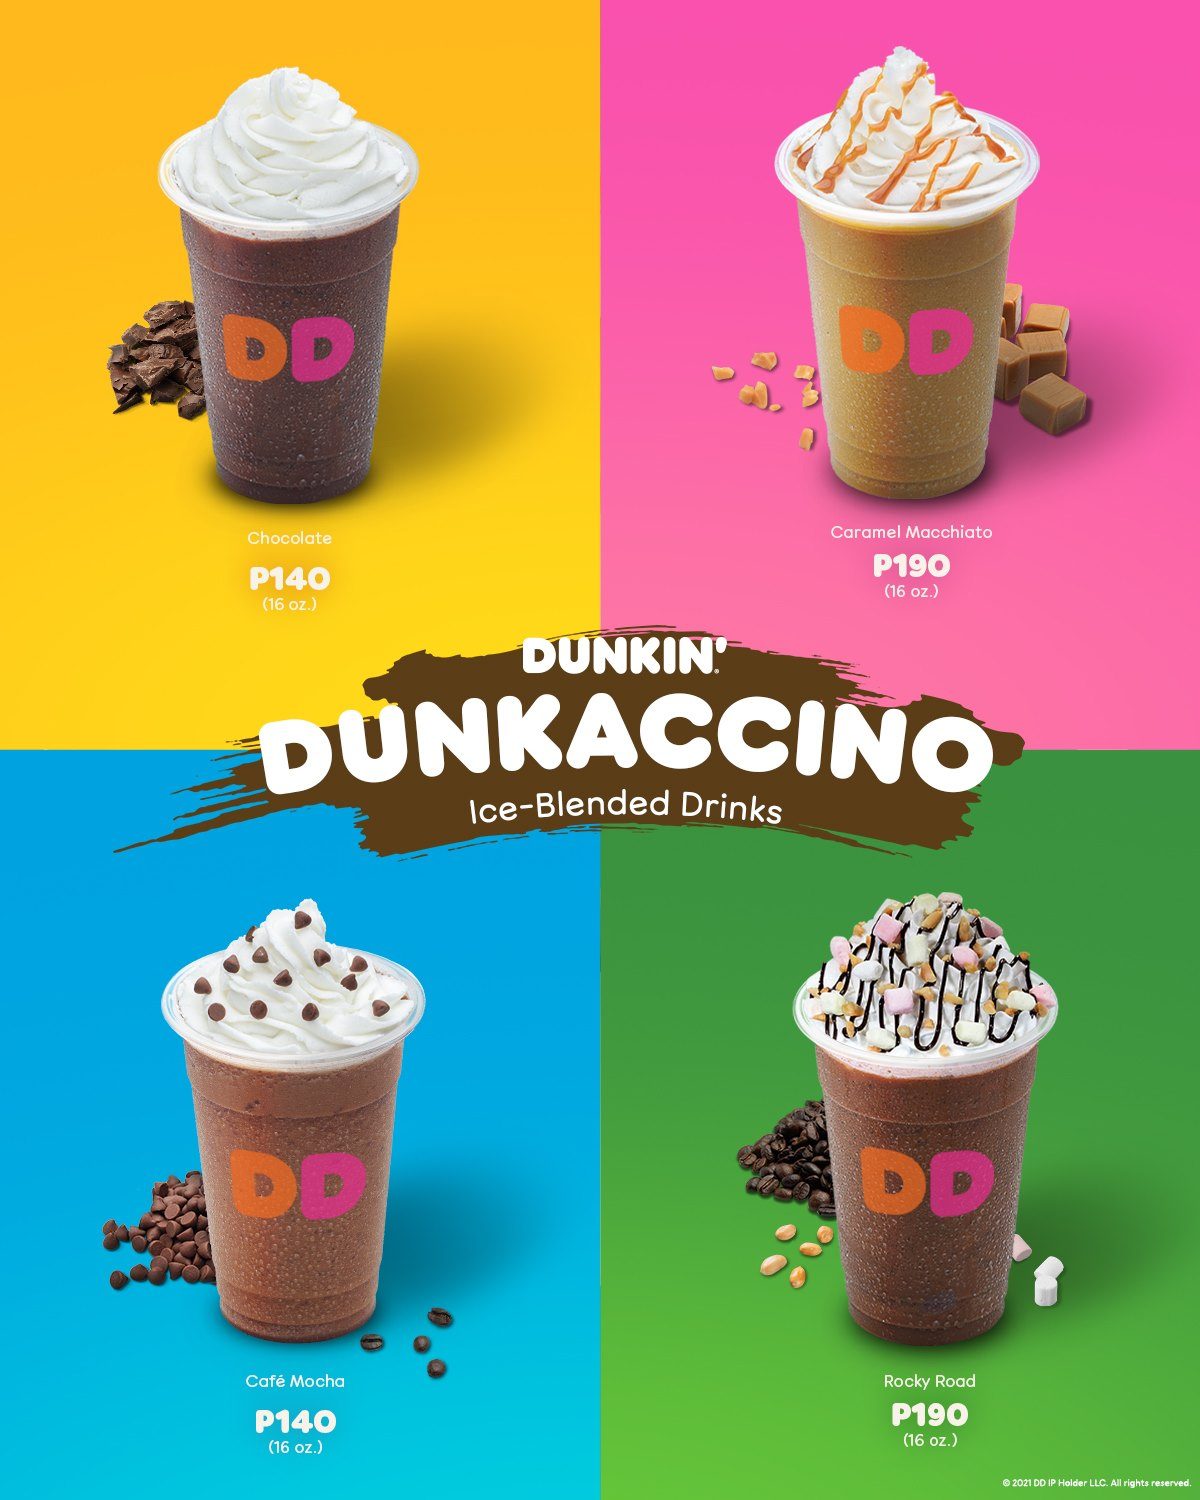 Dunkin' offers new 'dunkaccino' drinks